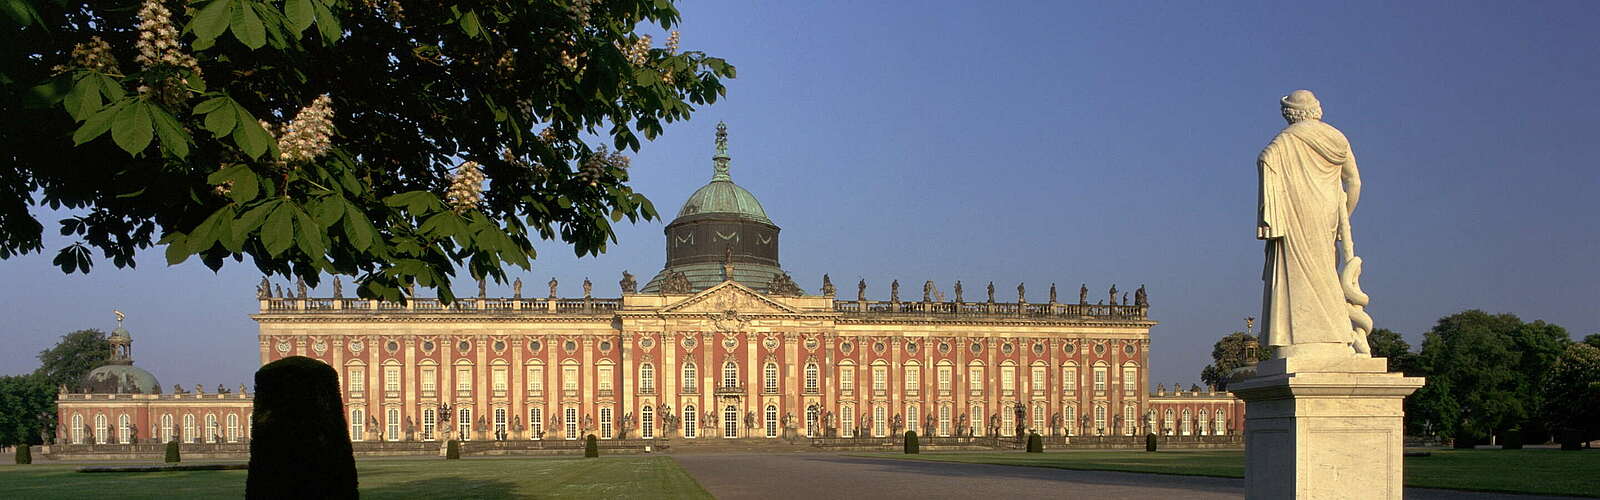 Neues Palais in Potsdam,
        
    

        Foto: TMB-Fotoarchiv/NBL-Boldt/Ihlow/SPSG